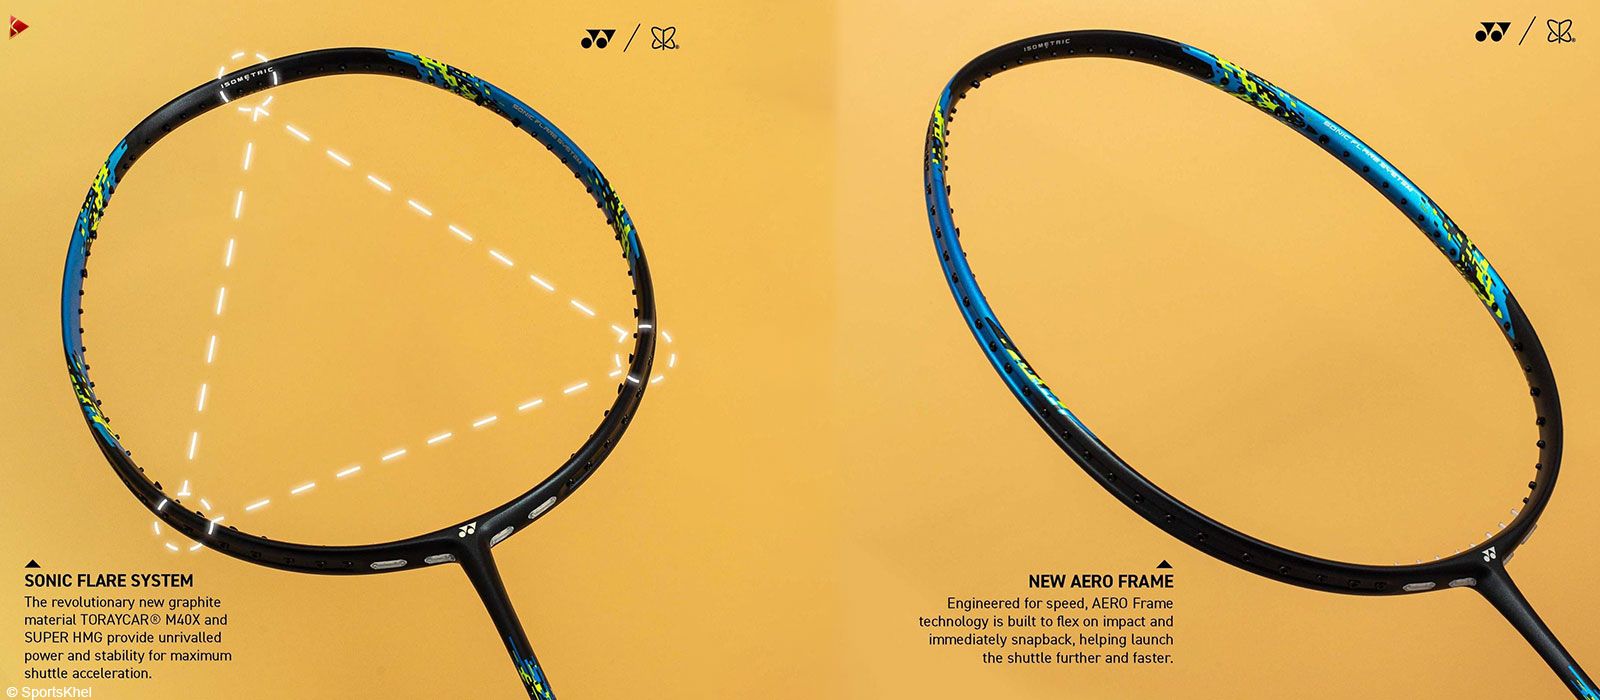 Yonex Nanoflare 700 Badminton Racket features